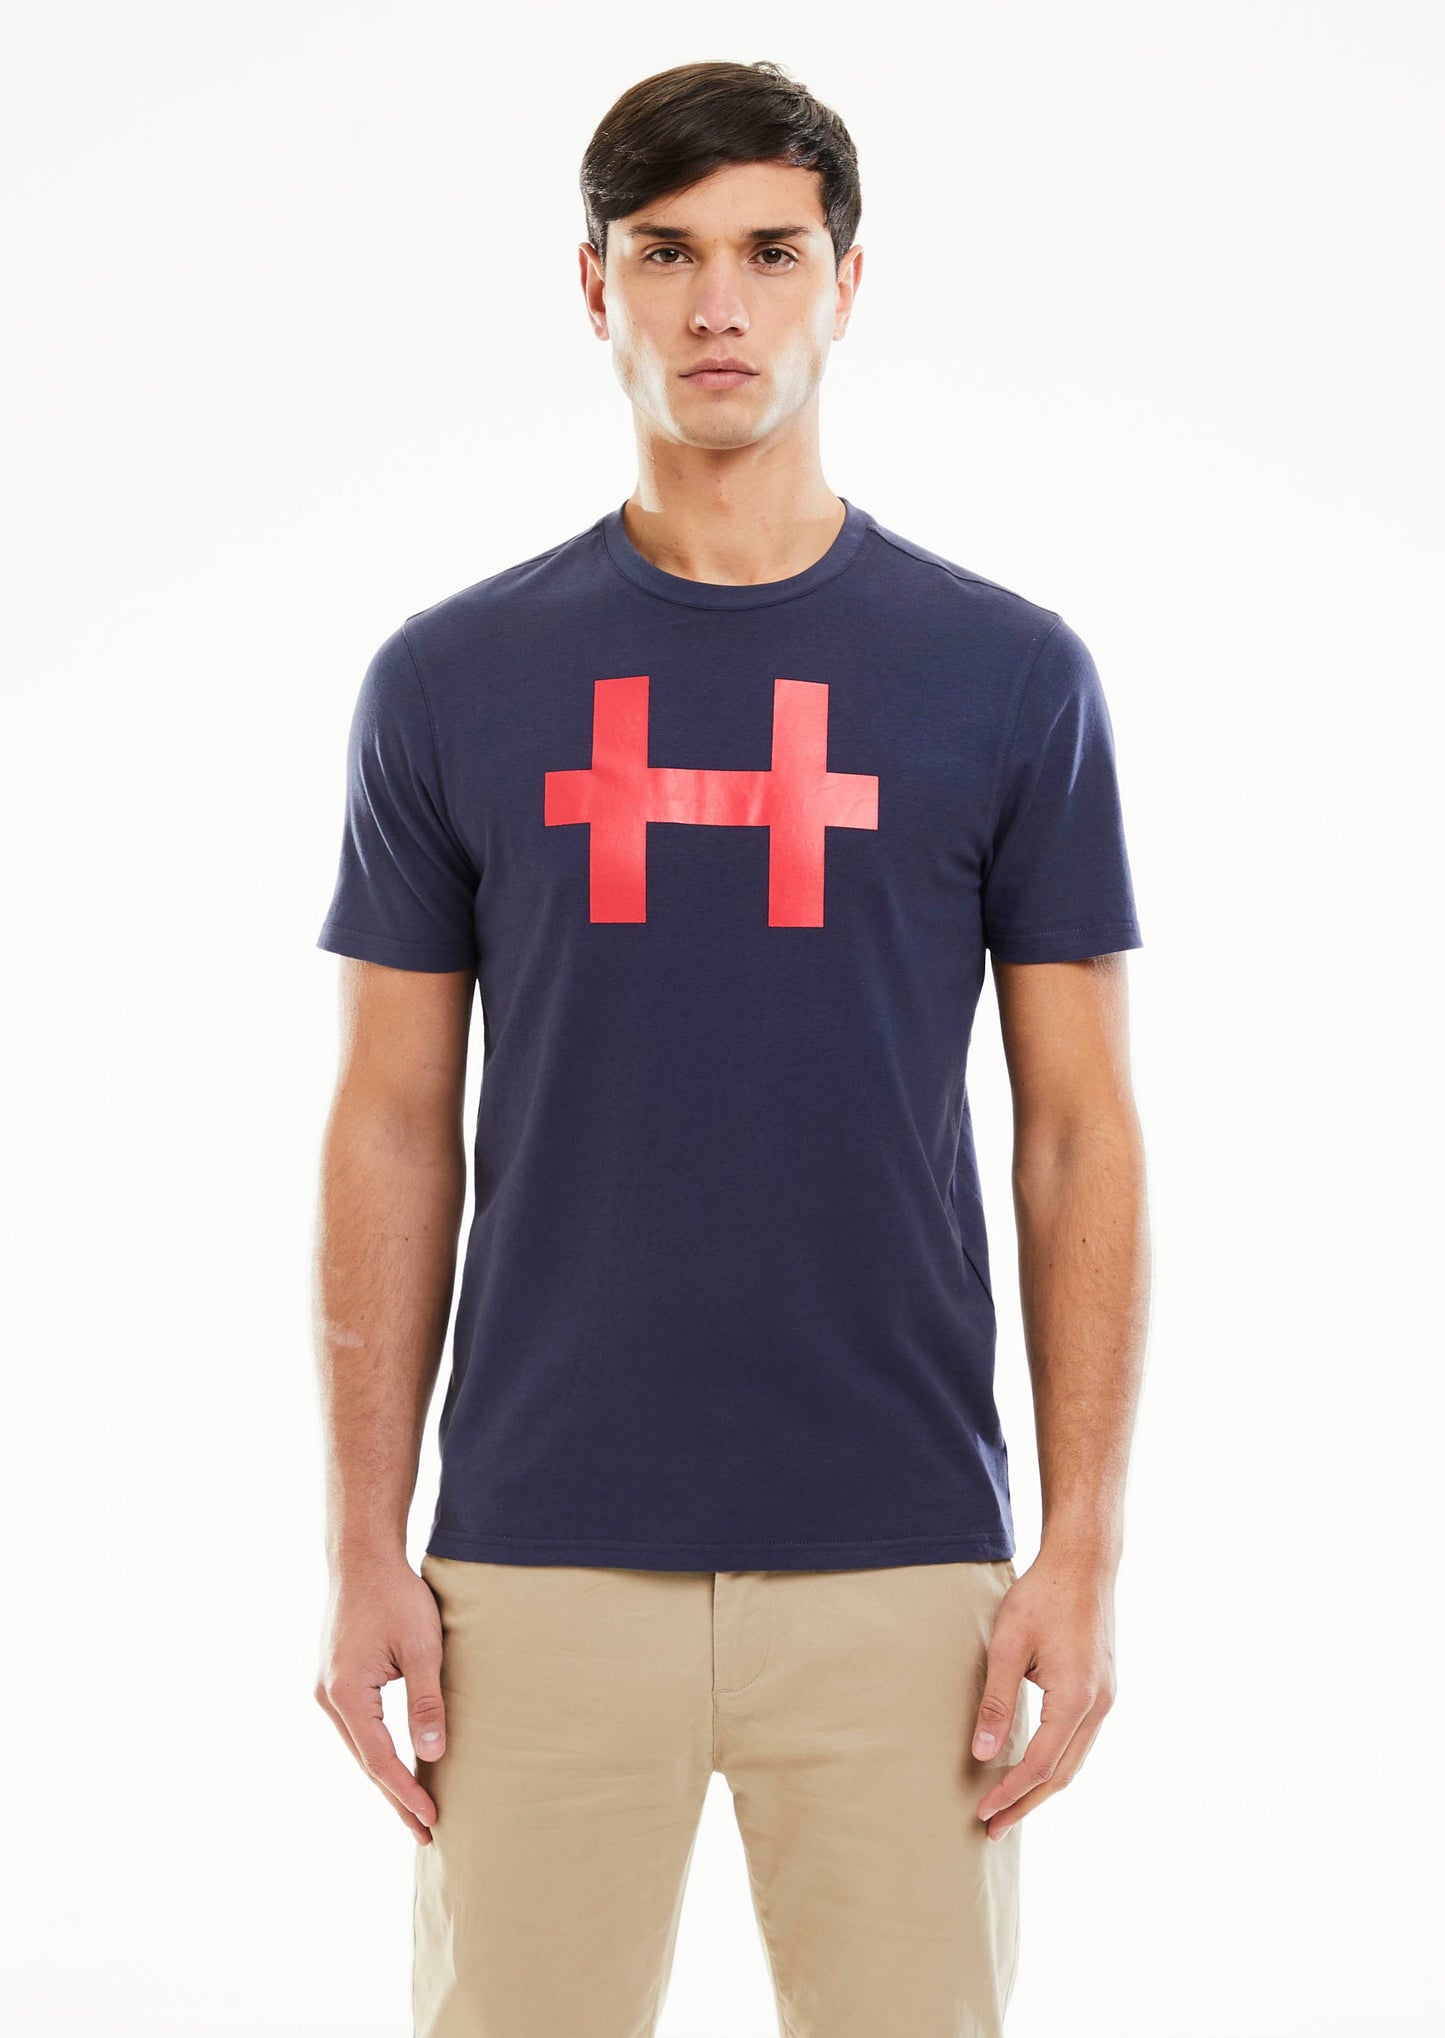 H Graphic T-Shirt - Navy